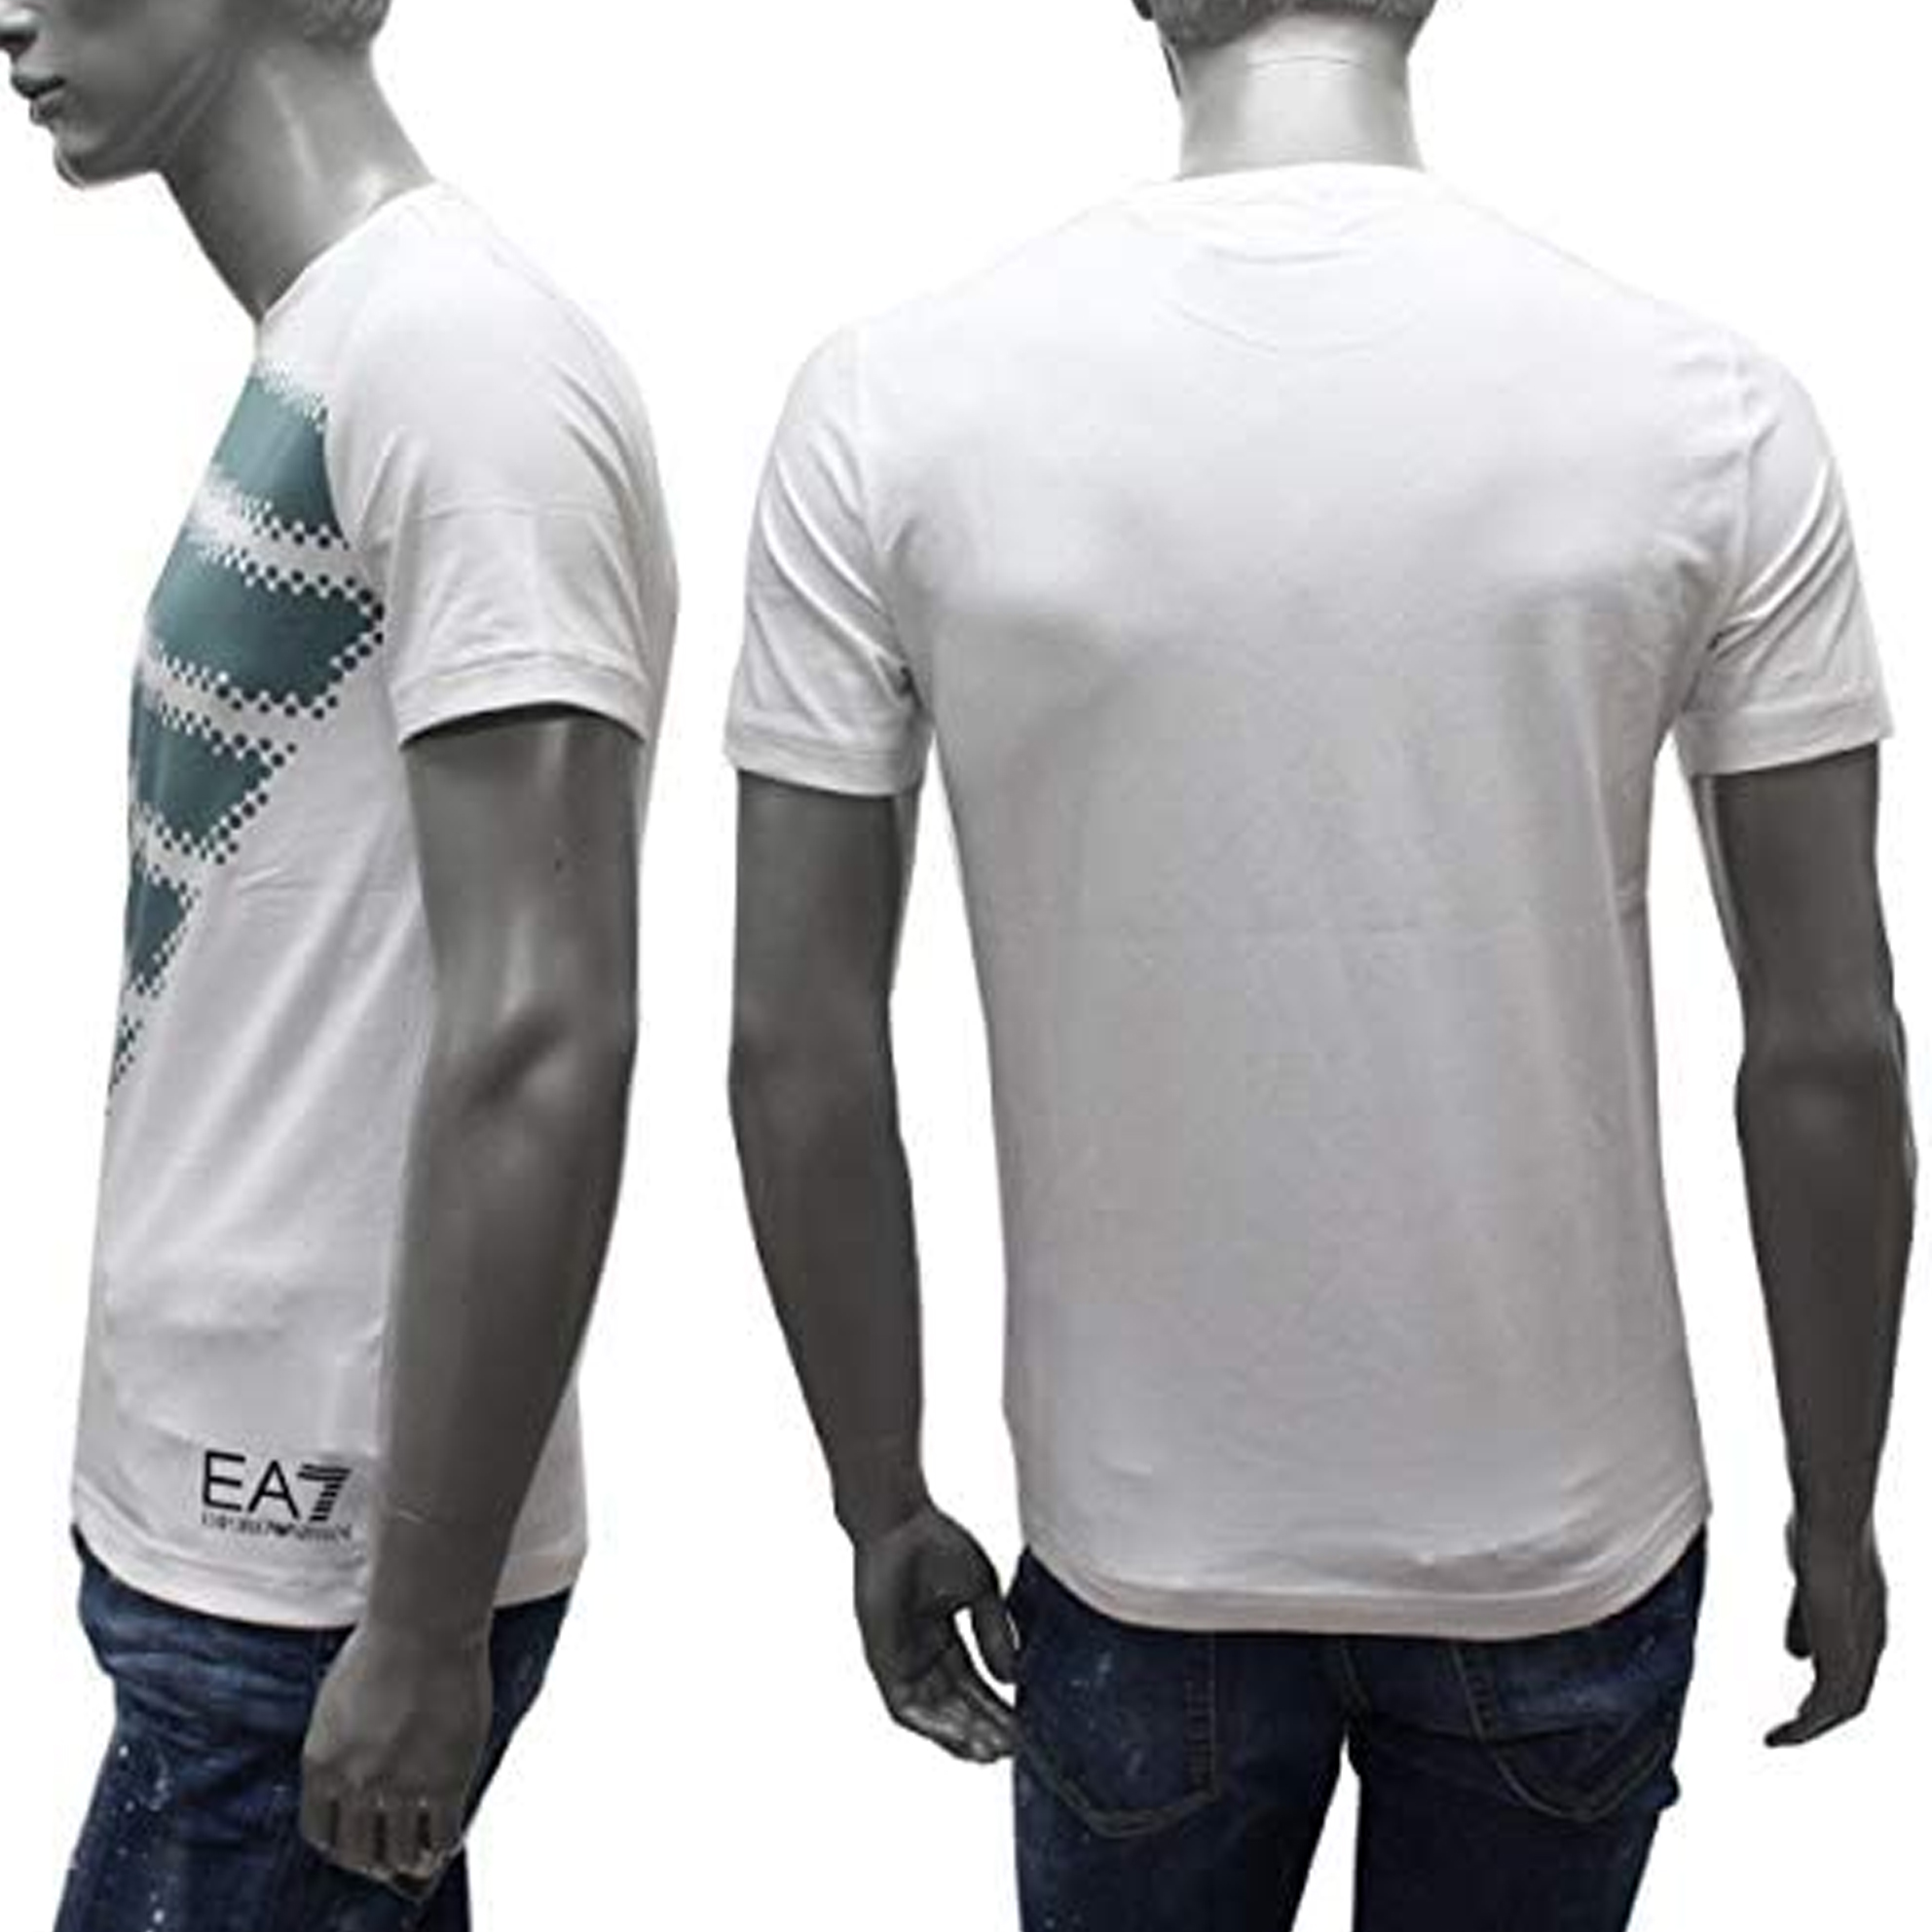 Image 2 of EA7 エンポリオアルマーニ メンズ EA7 BIG バブル7 半袖Tシャツ ホワイト 3HPT54 PJP6Z 1100